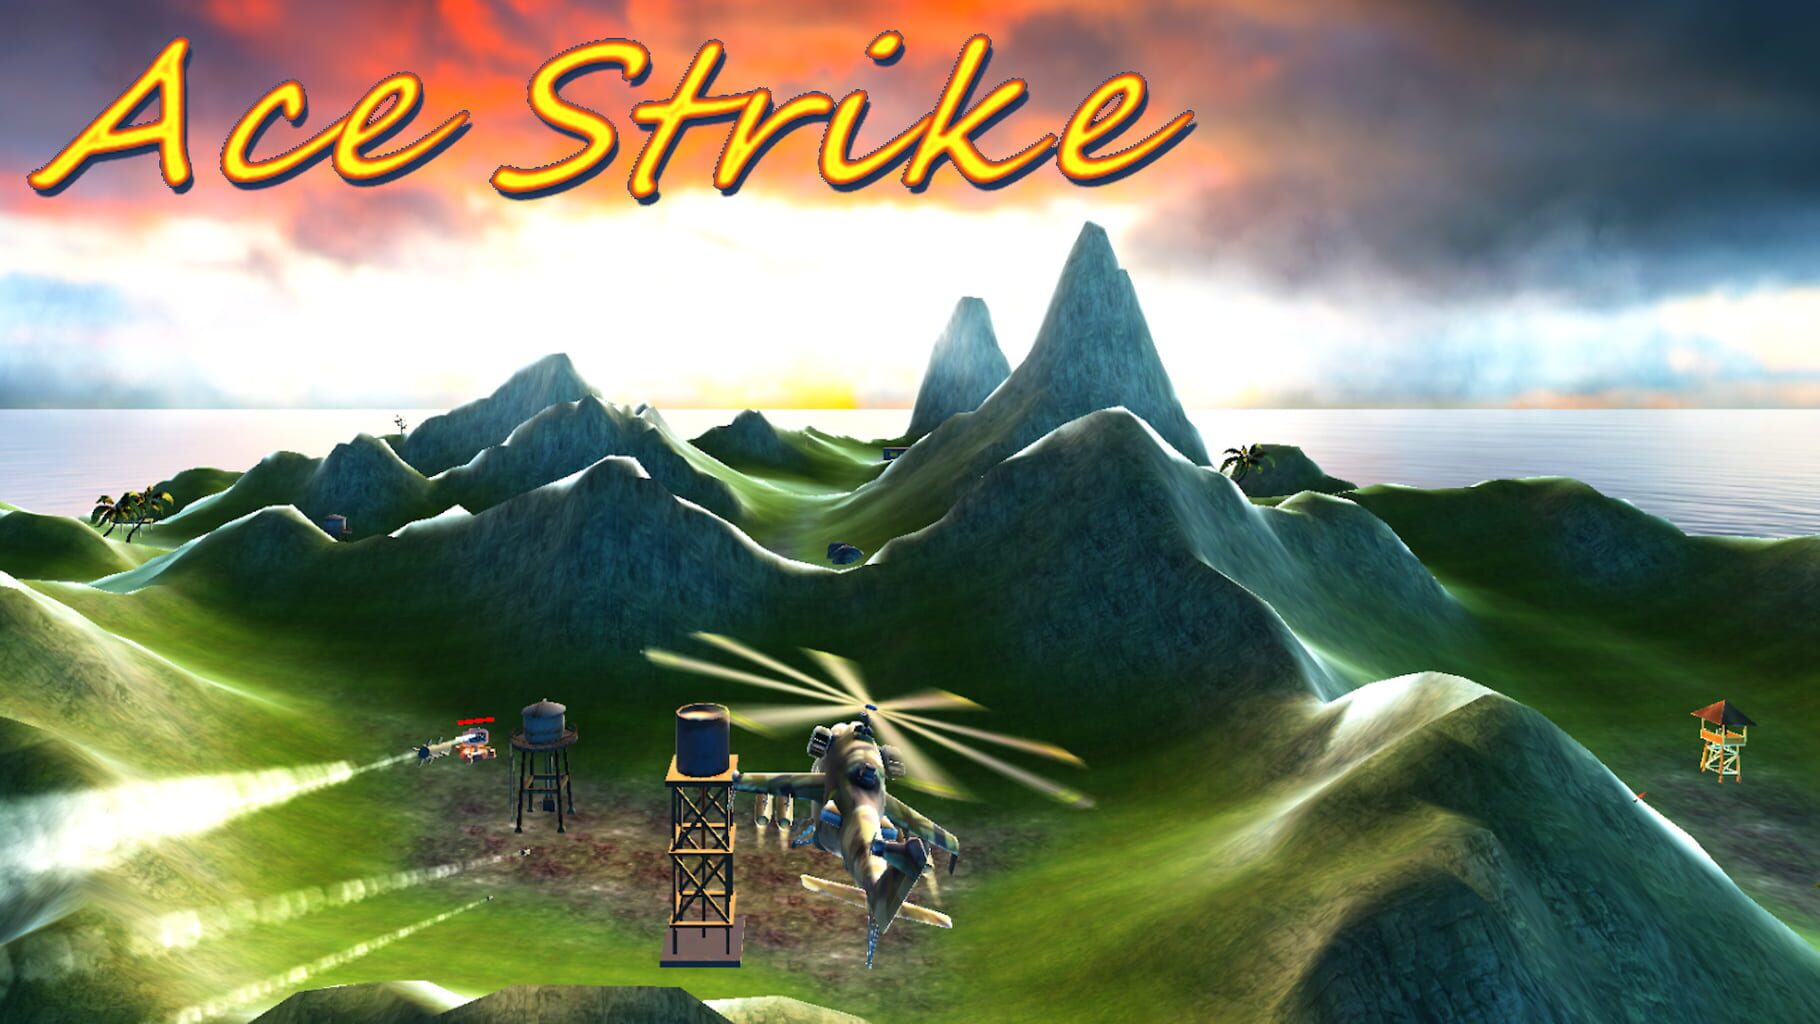 Ace Strike artwork